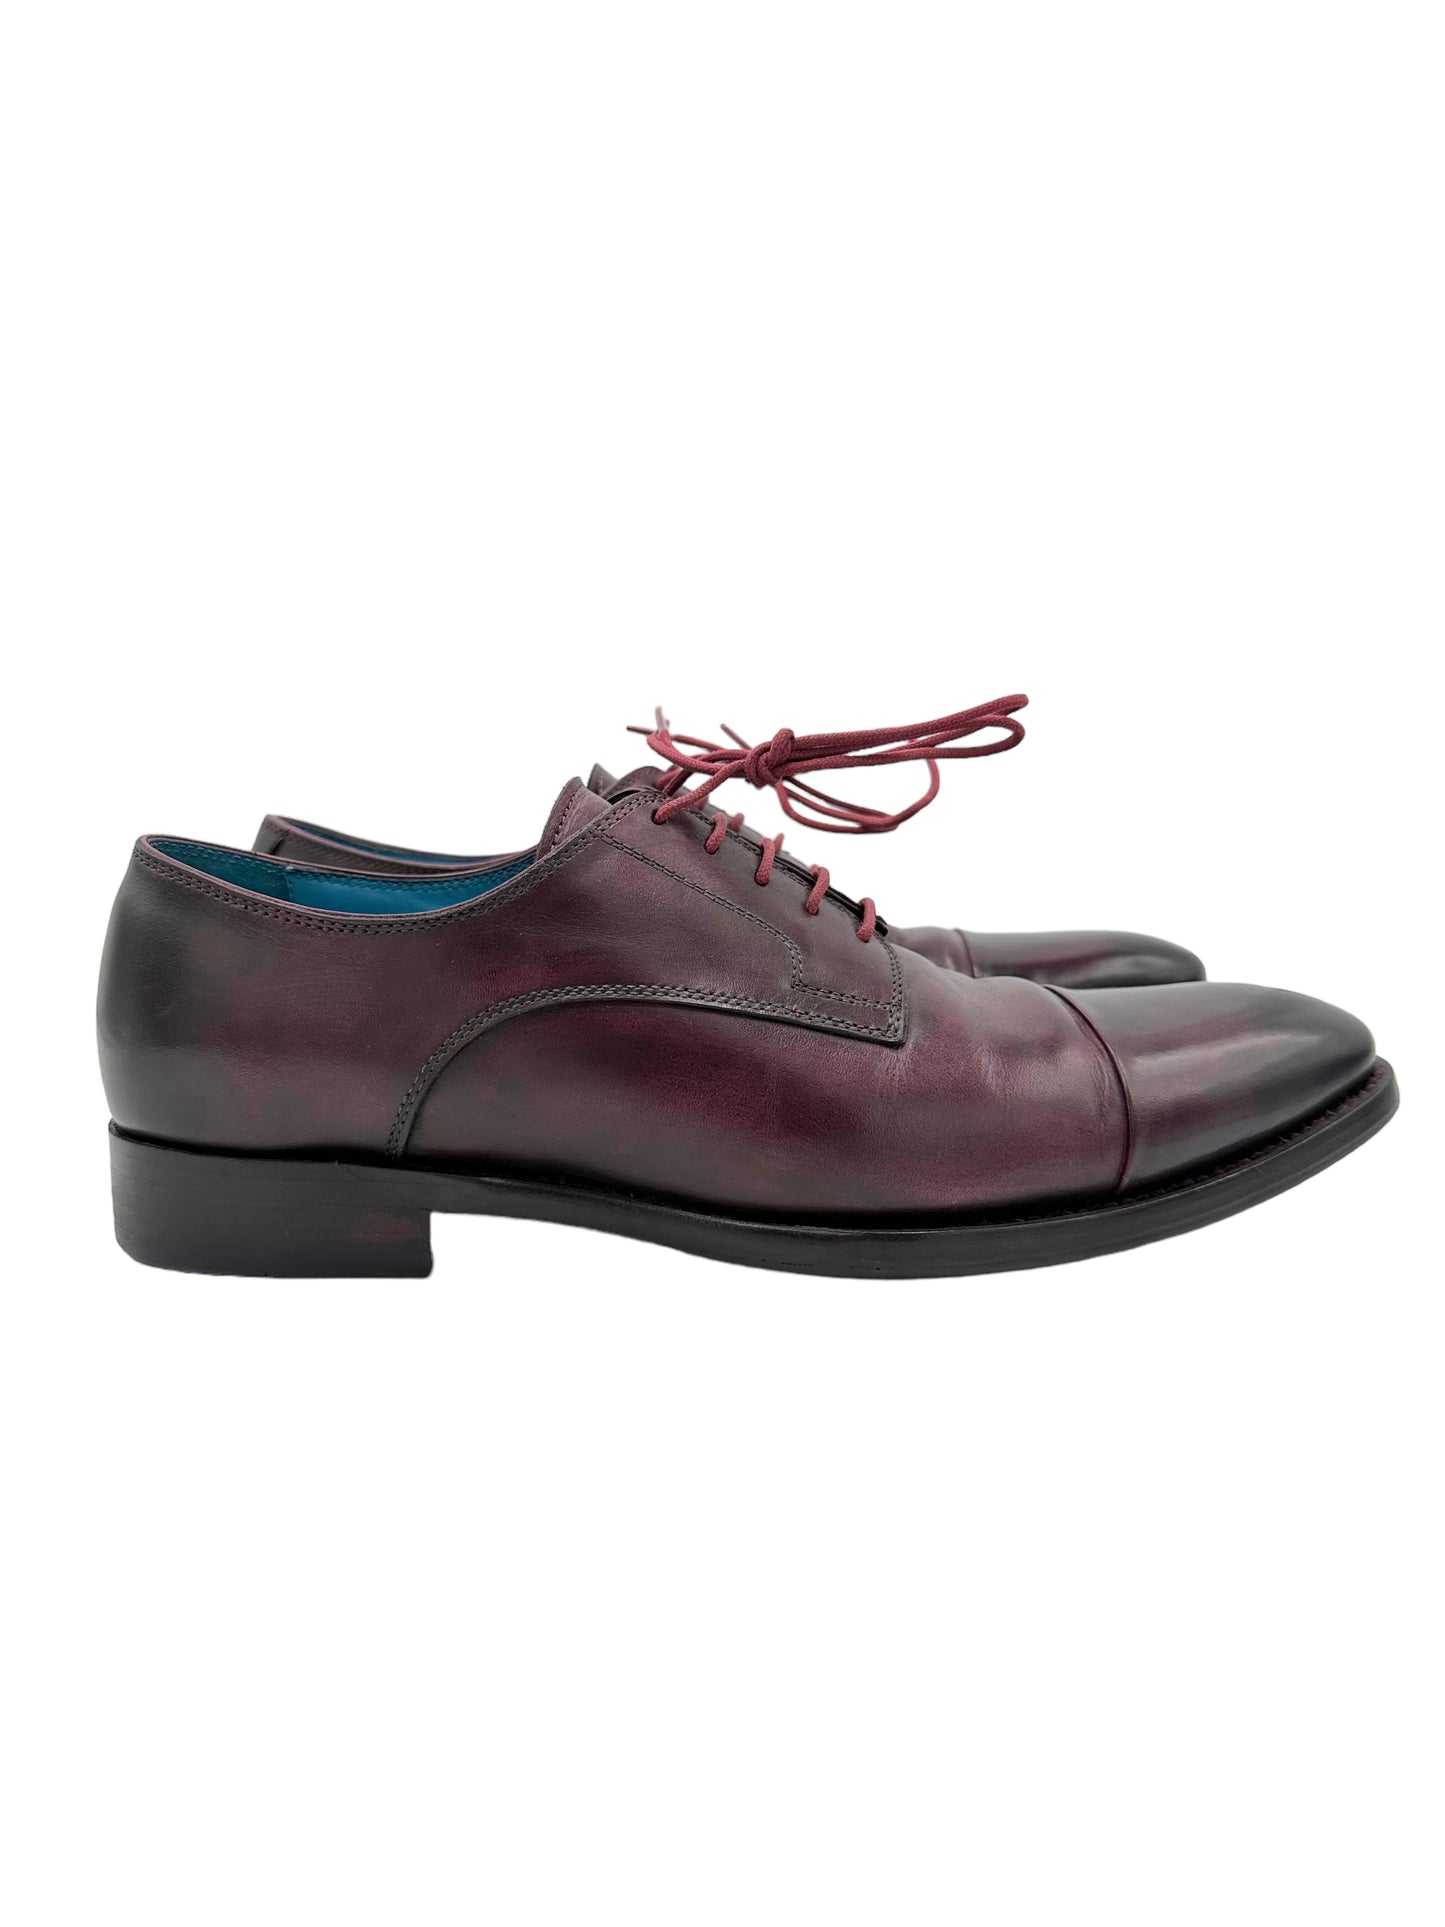 Custom Unbranded Purple Burgundy Oxford Dress Shoe